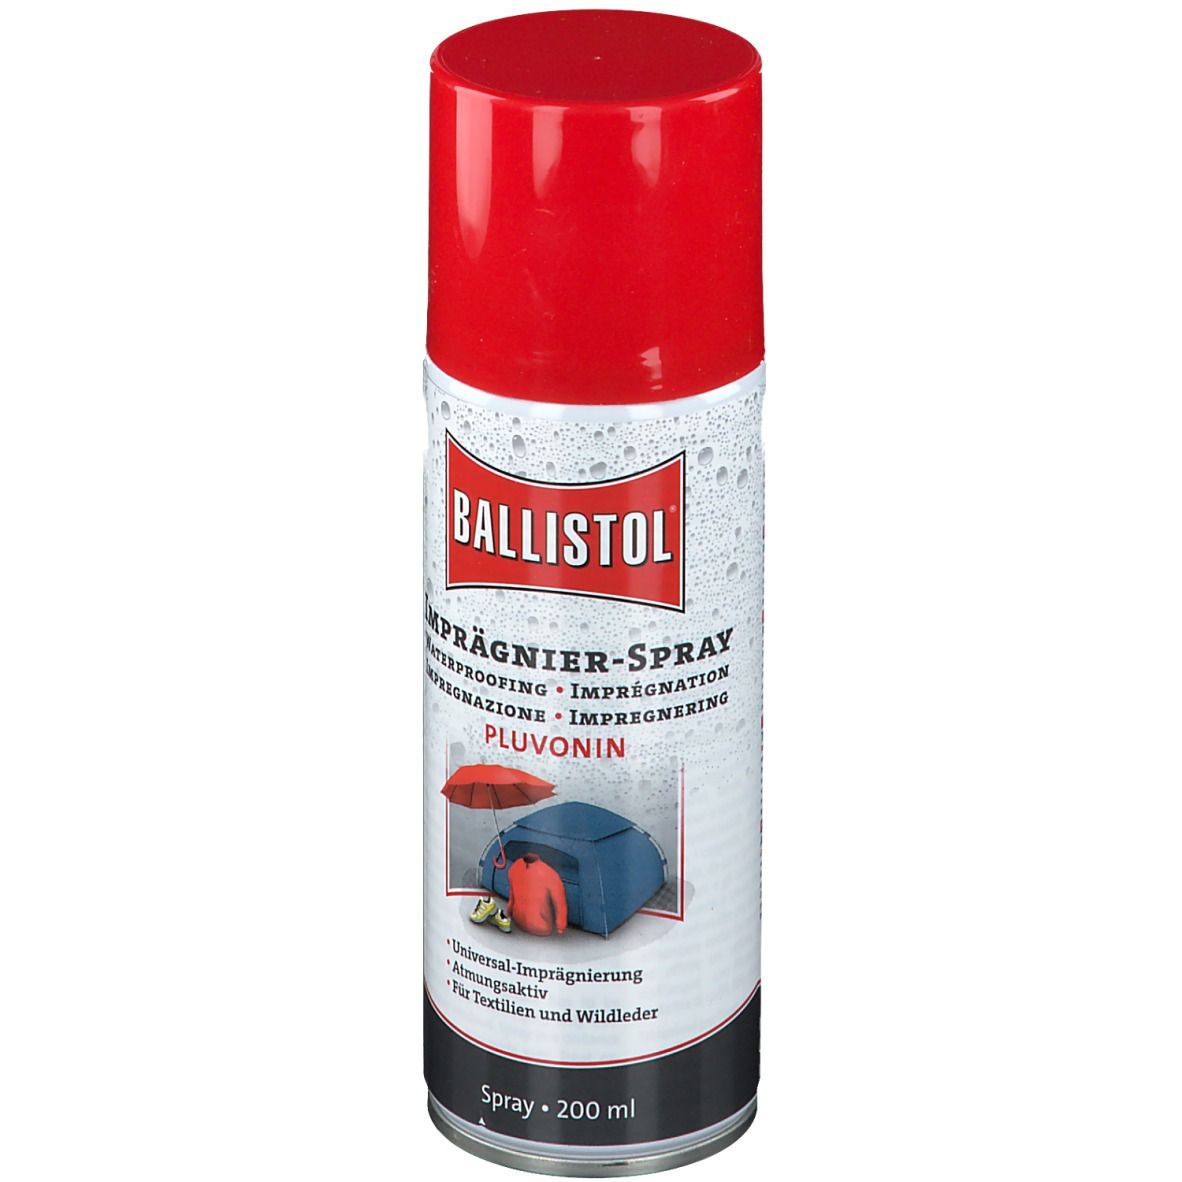 BALLISTOL® Pluvonin Imprägnierspray 200 ml - SHOP APOTHEKE